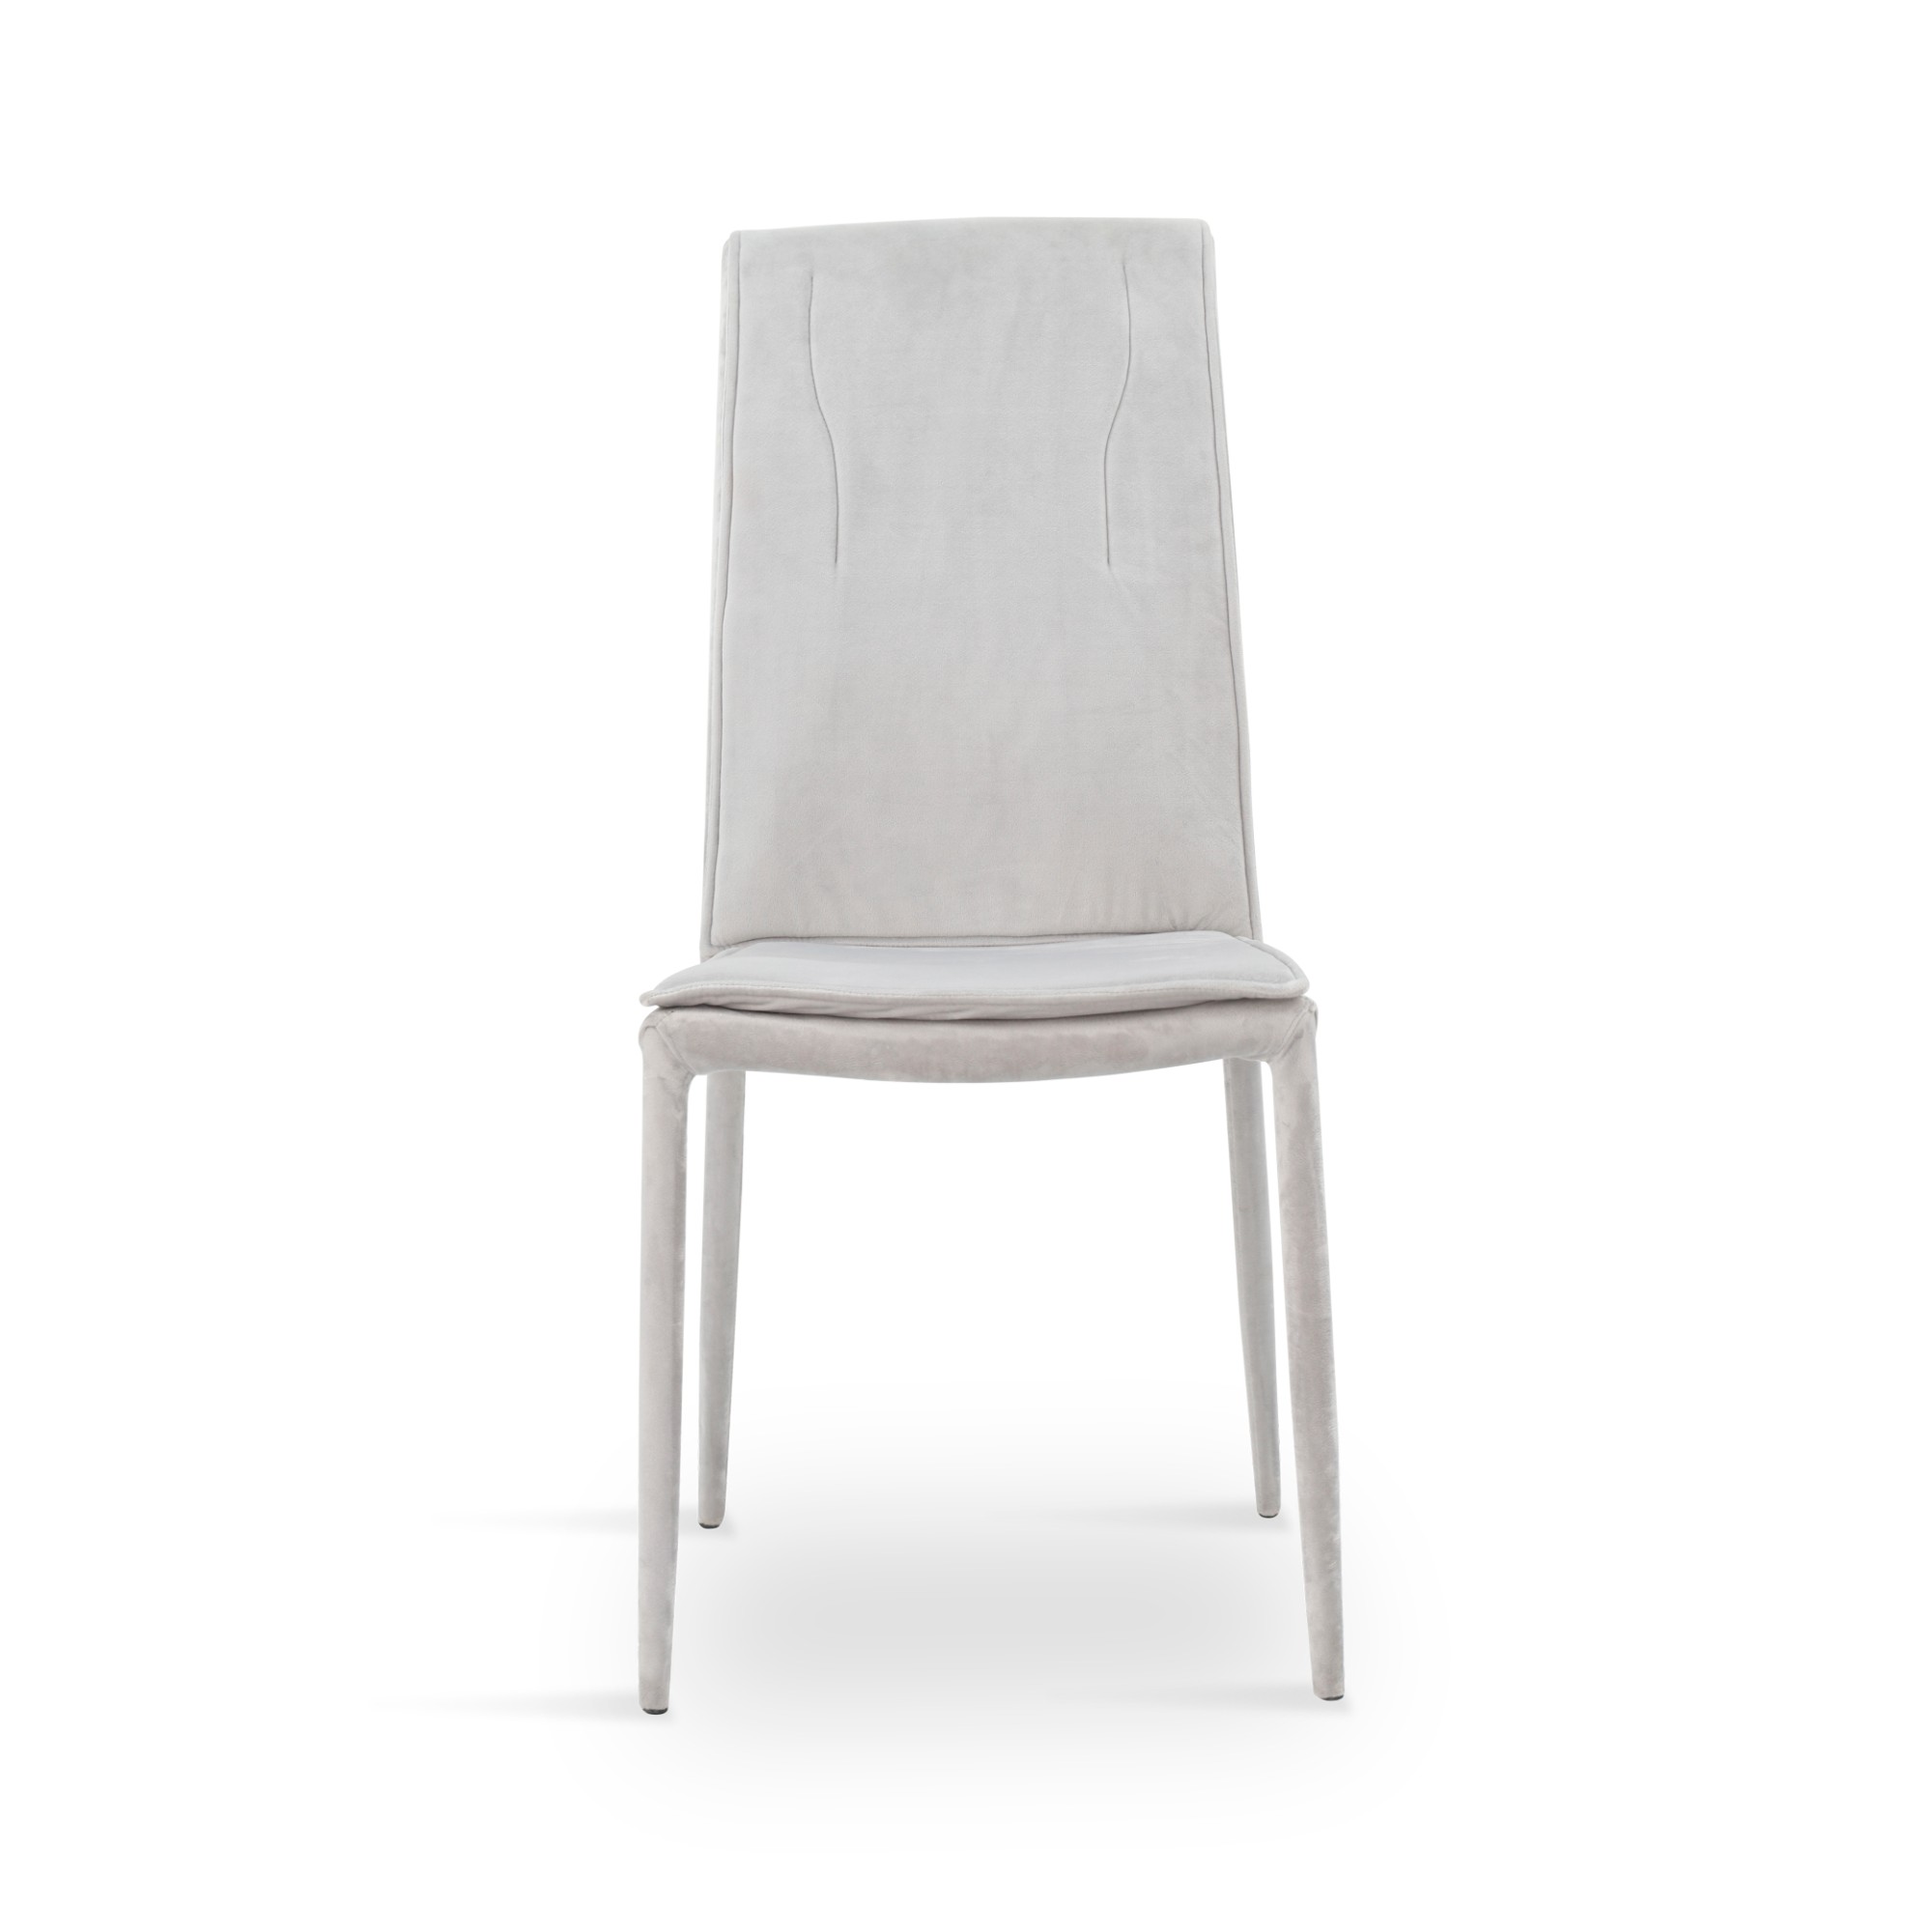 Modern Design  Metal Legs modern arm dining chair home furniture living room leisure chair